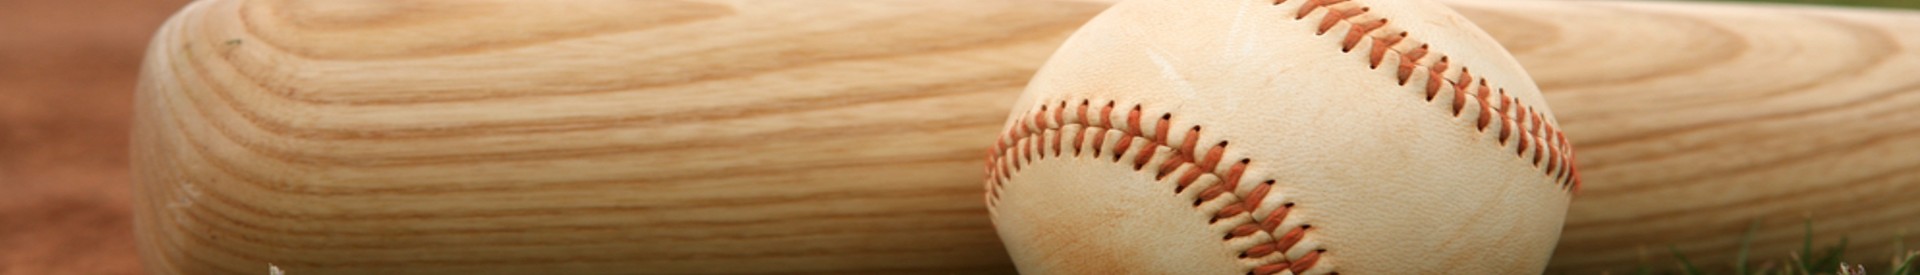 Baseball bat and glove on field